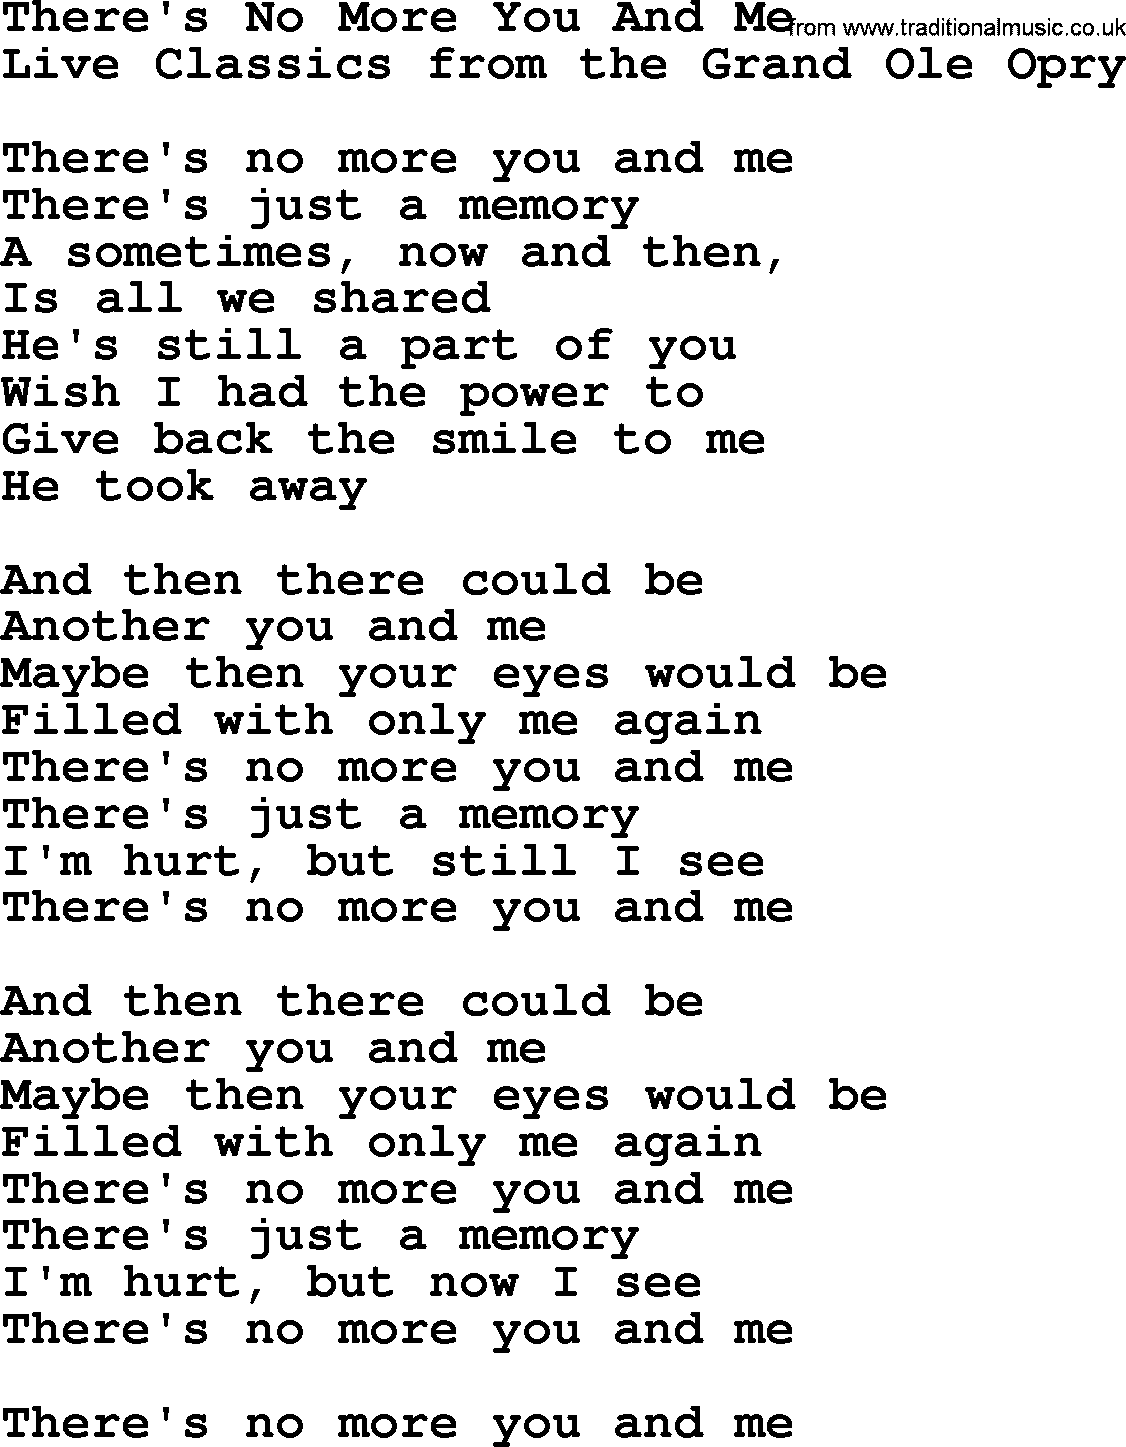 Marty Robbins song: Theres No More You And Me, lyrics